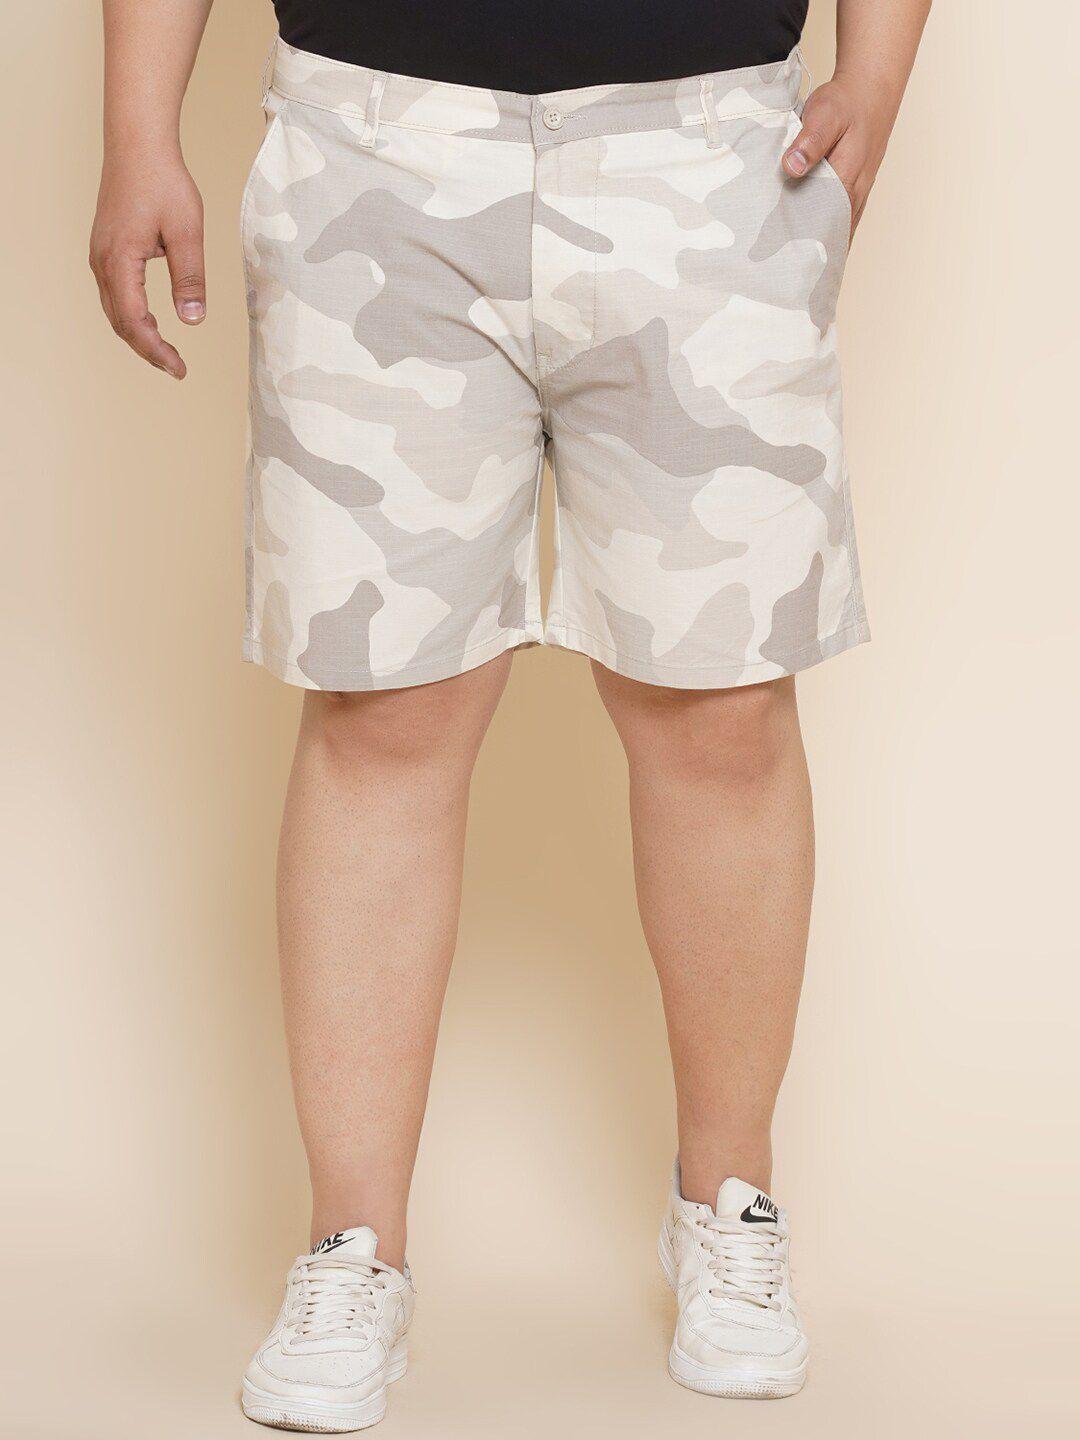 john-pride-men-plus-size-conversational-printed-mid-rise-shorts